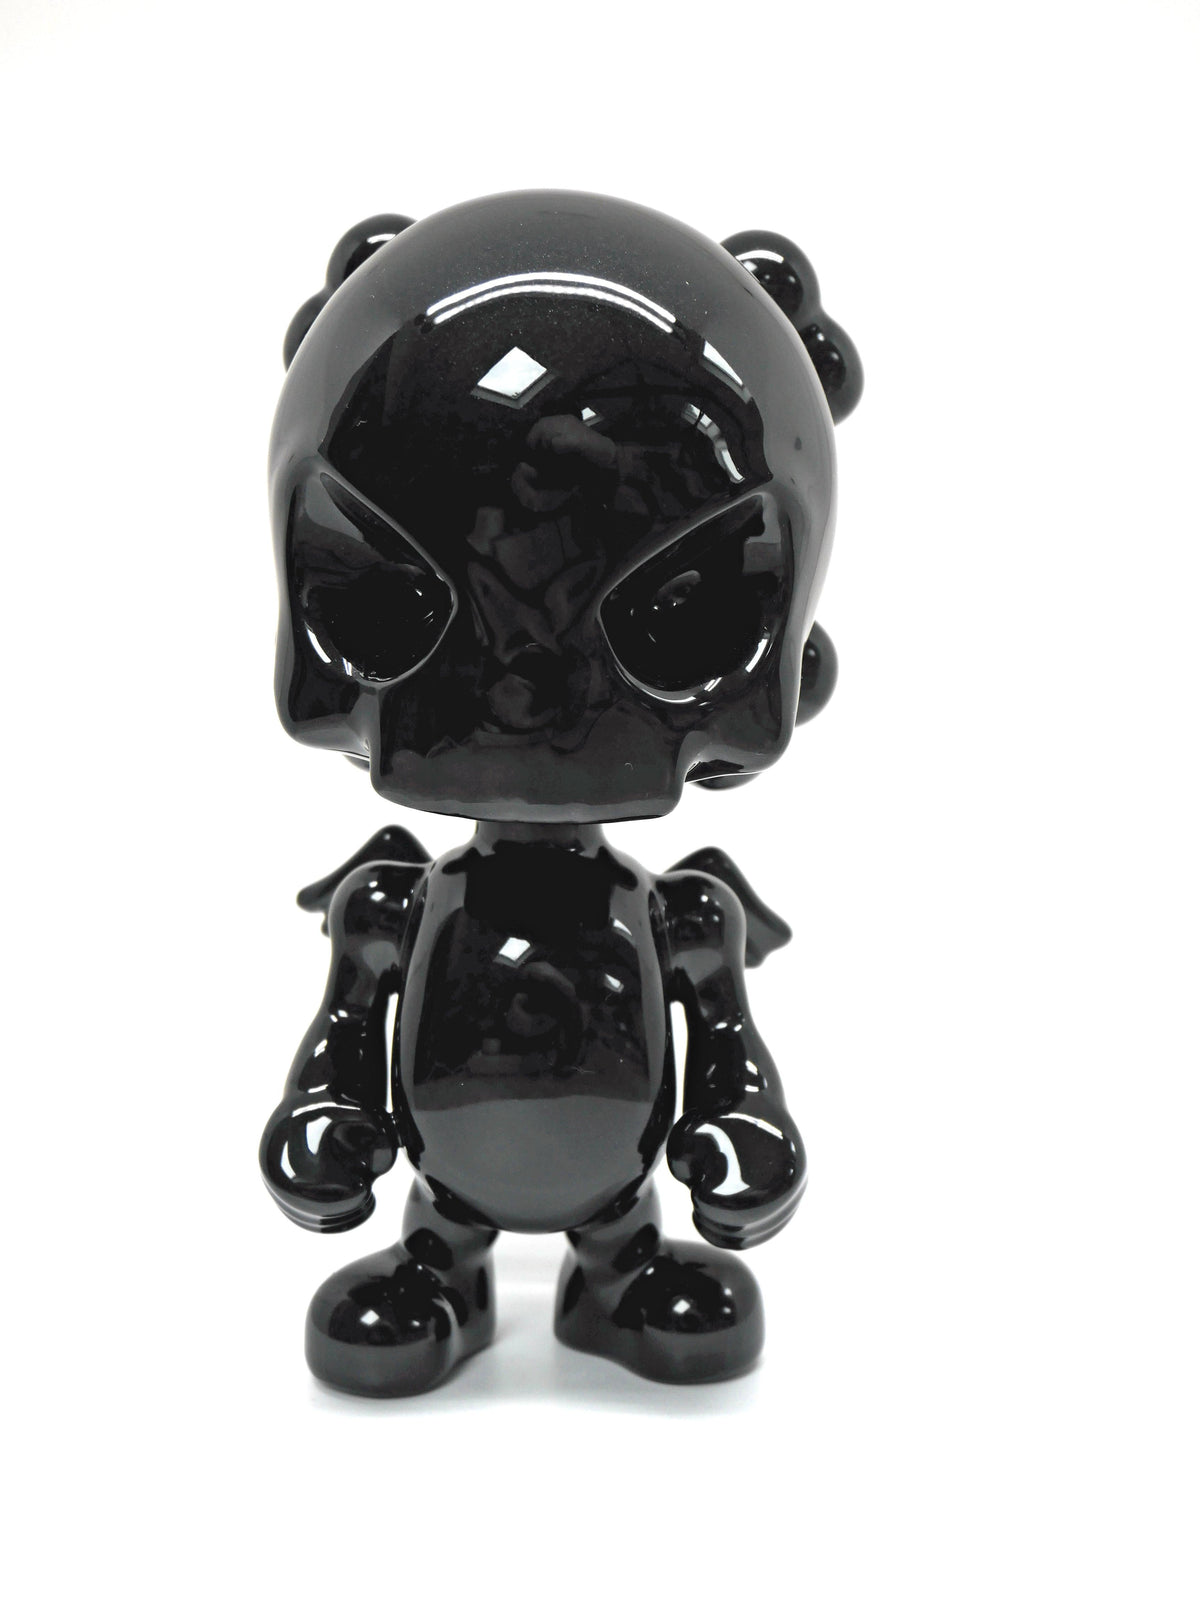 Sculpture SkullHead Black Porcelain by Huck Gee ArtAndToys